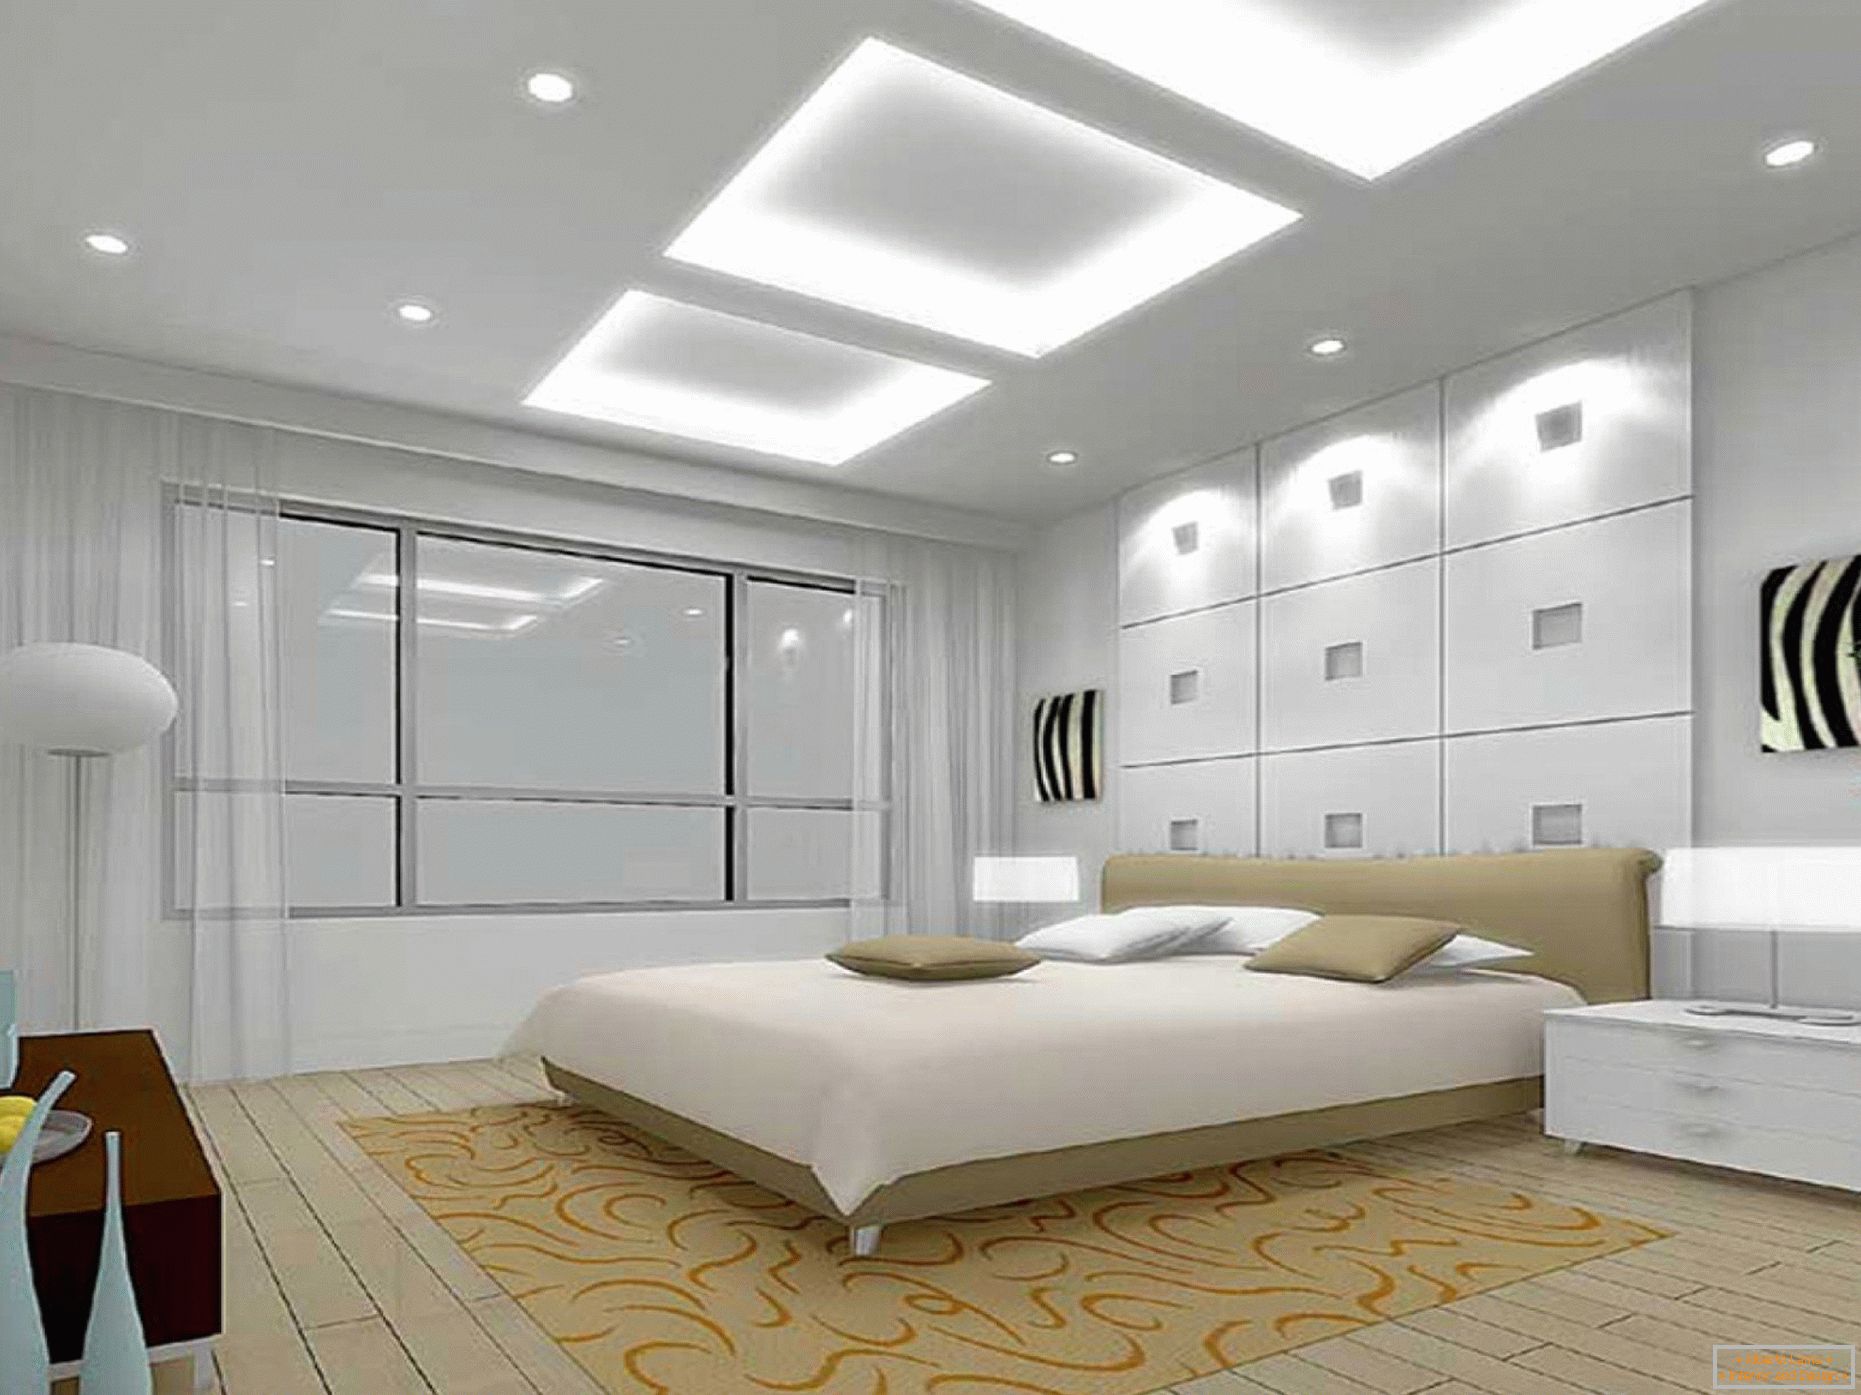 Bedroom lighting option in white tones